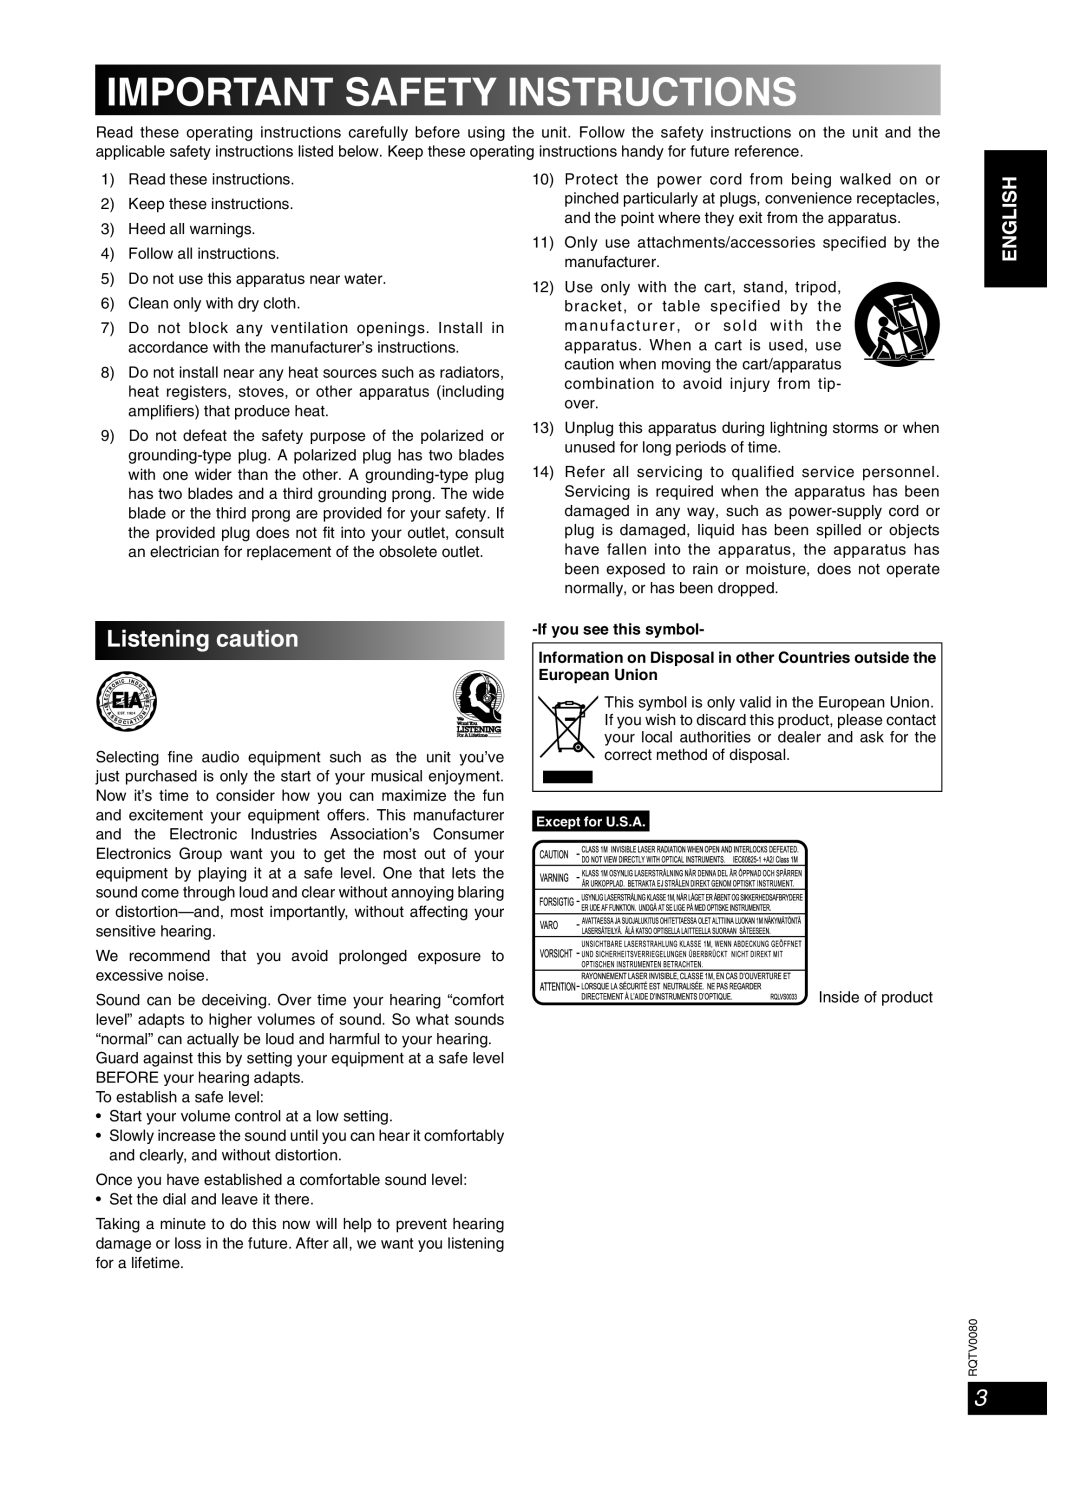 Panasonic RQTV0080-1P, SC-PM23 Listening caution, ENGLISH English, Important Safety Instructions 